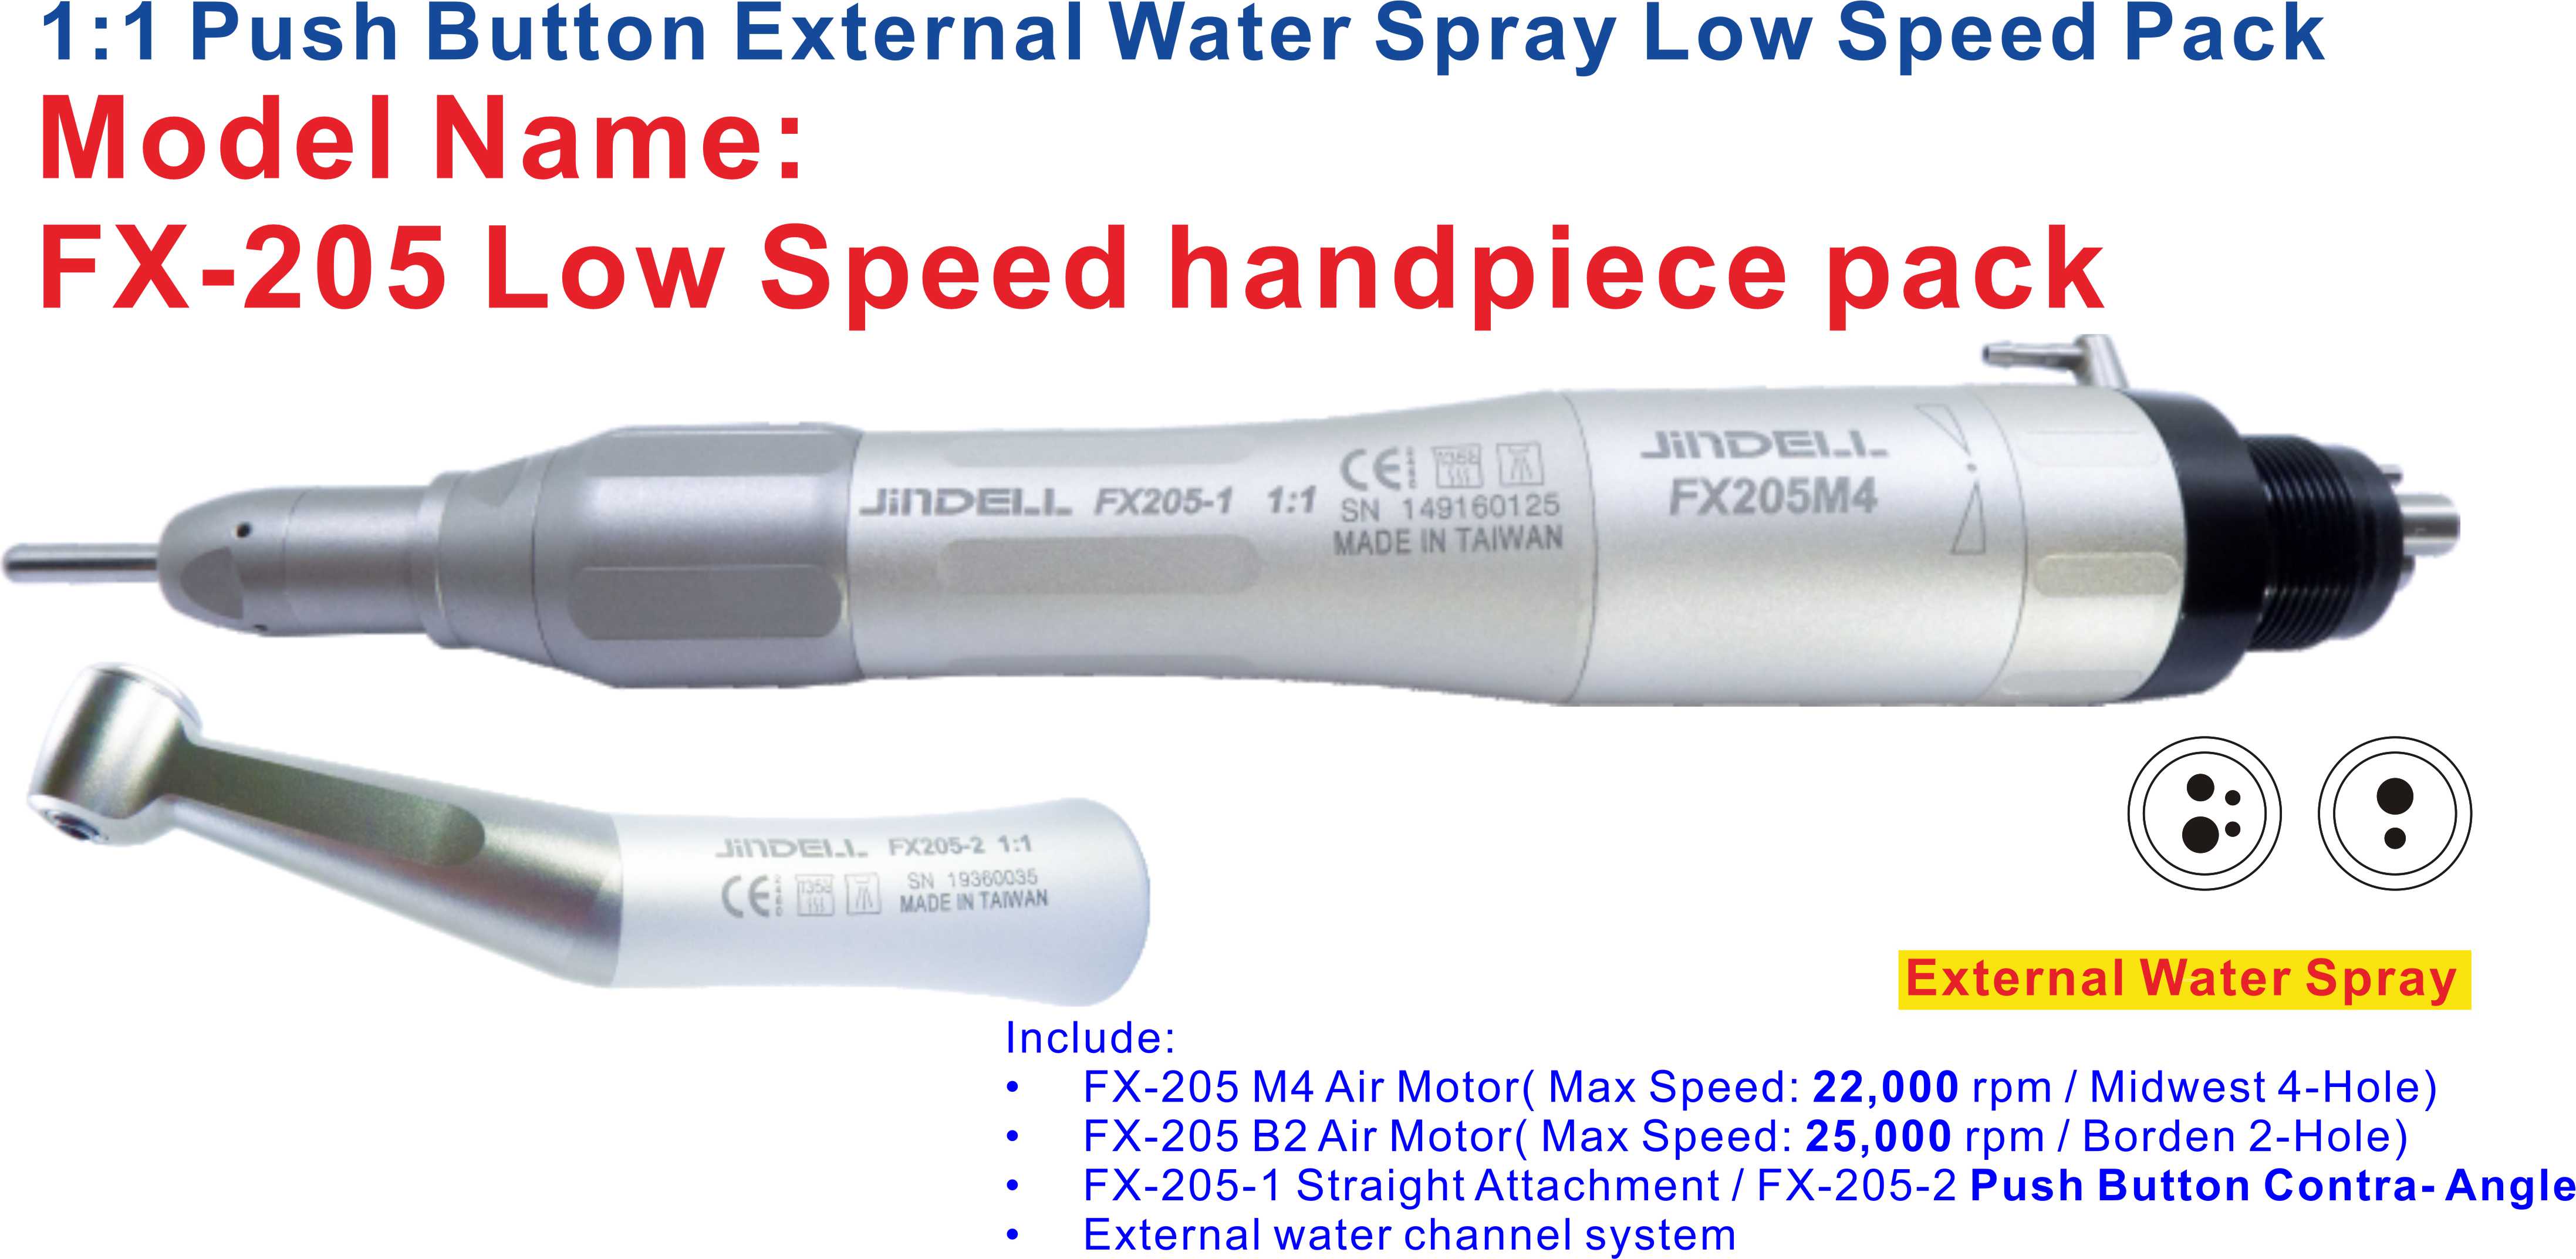 FX-205 External Water Push Button Chuck Type of Low Speed Handpiece Pack